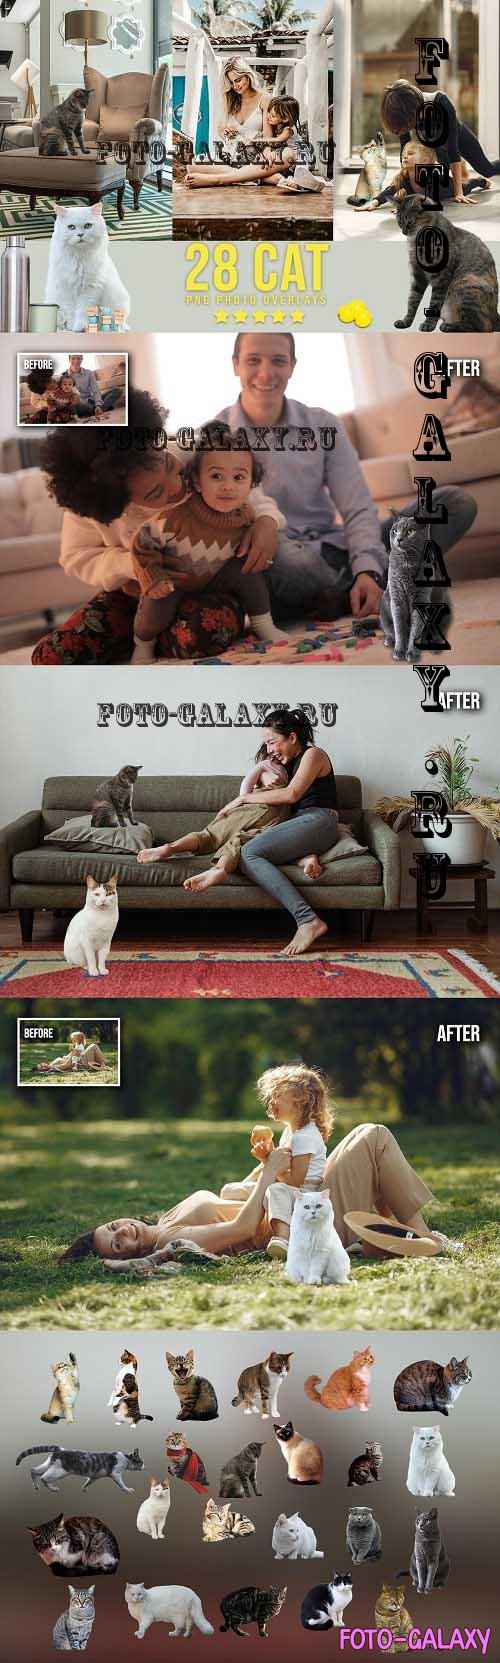 28 Cat Photoshop Overlays - 6737913